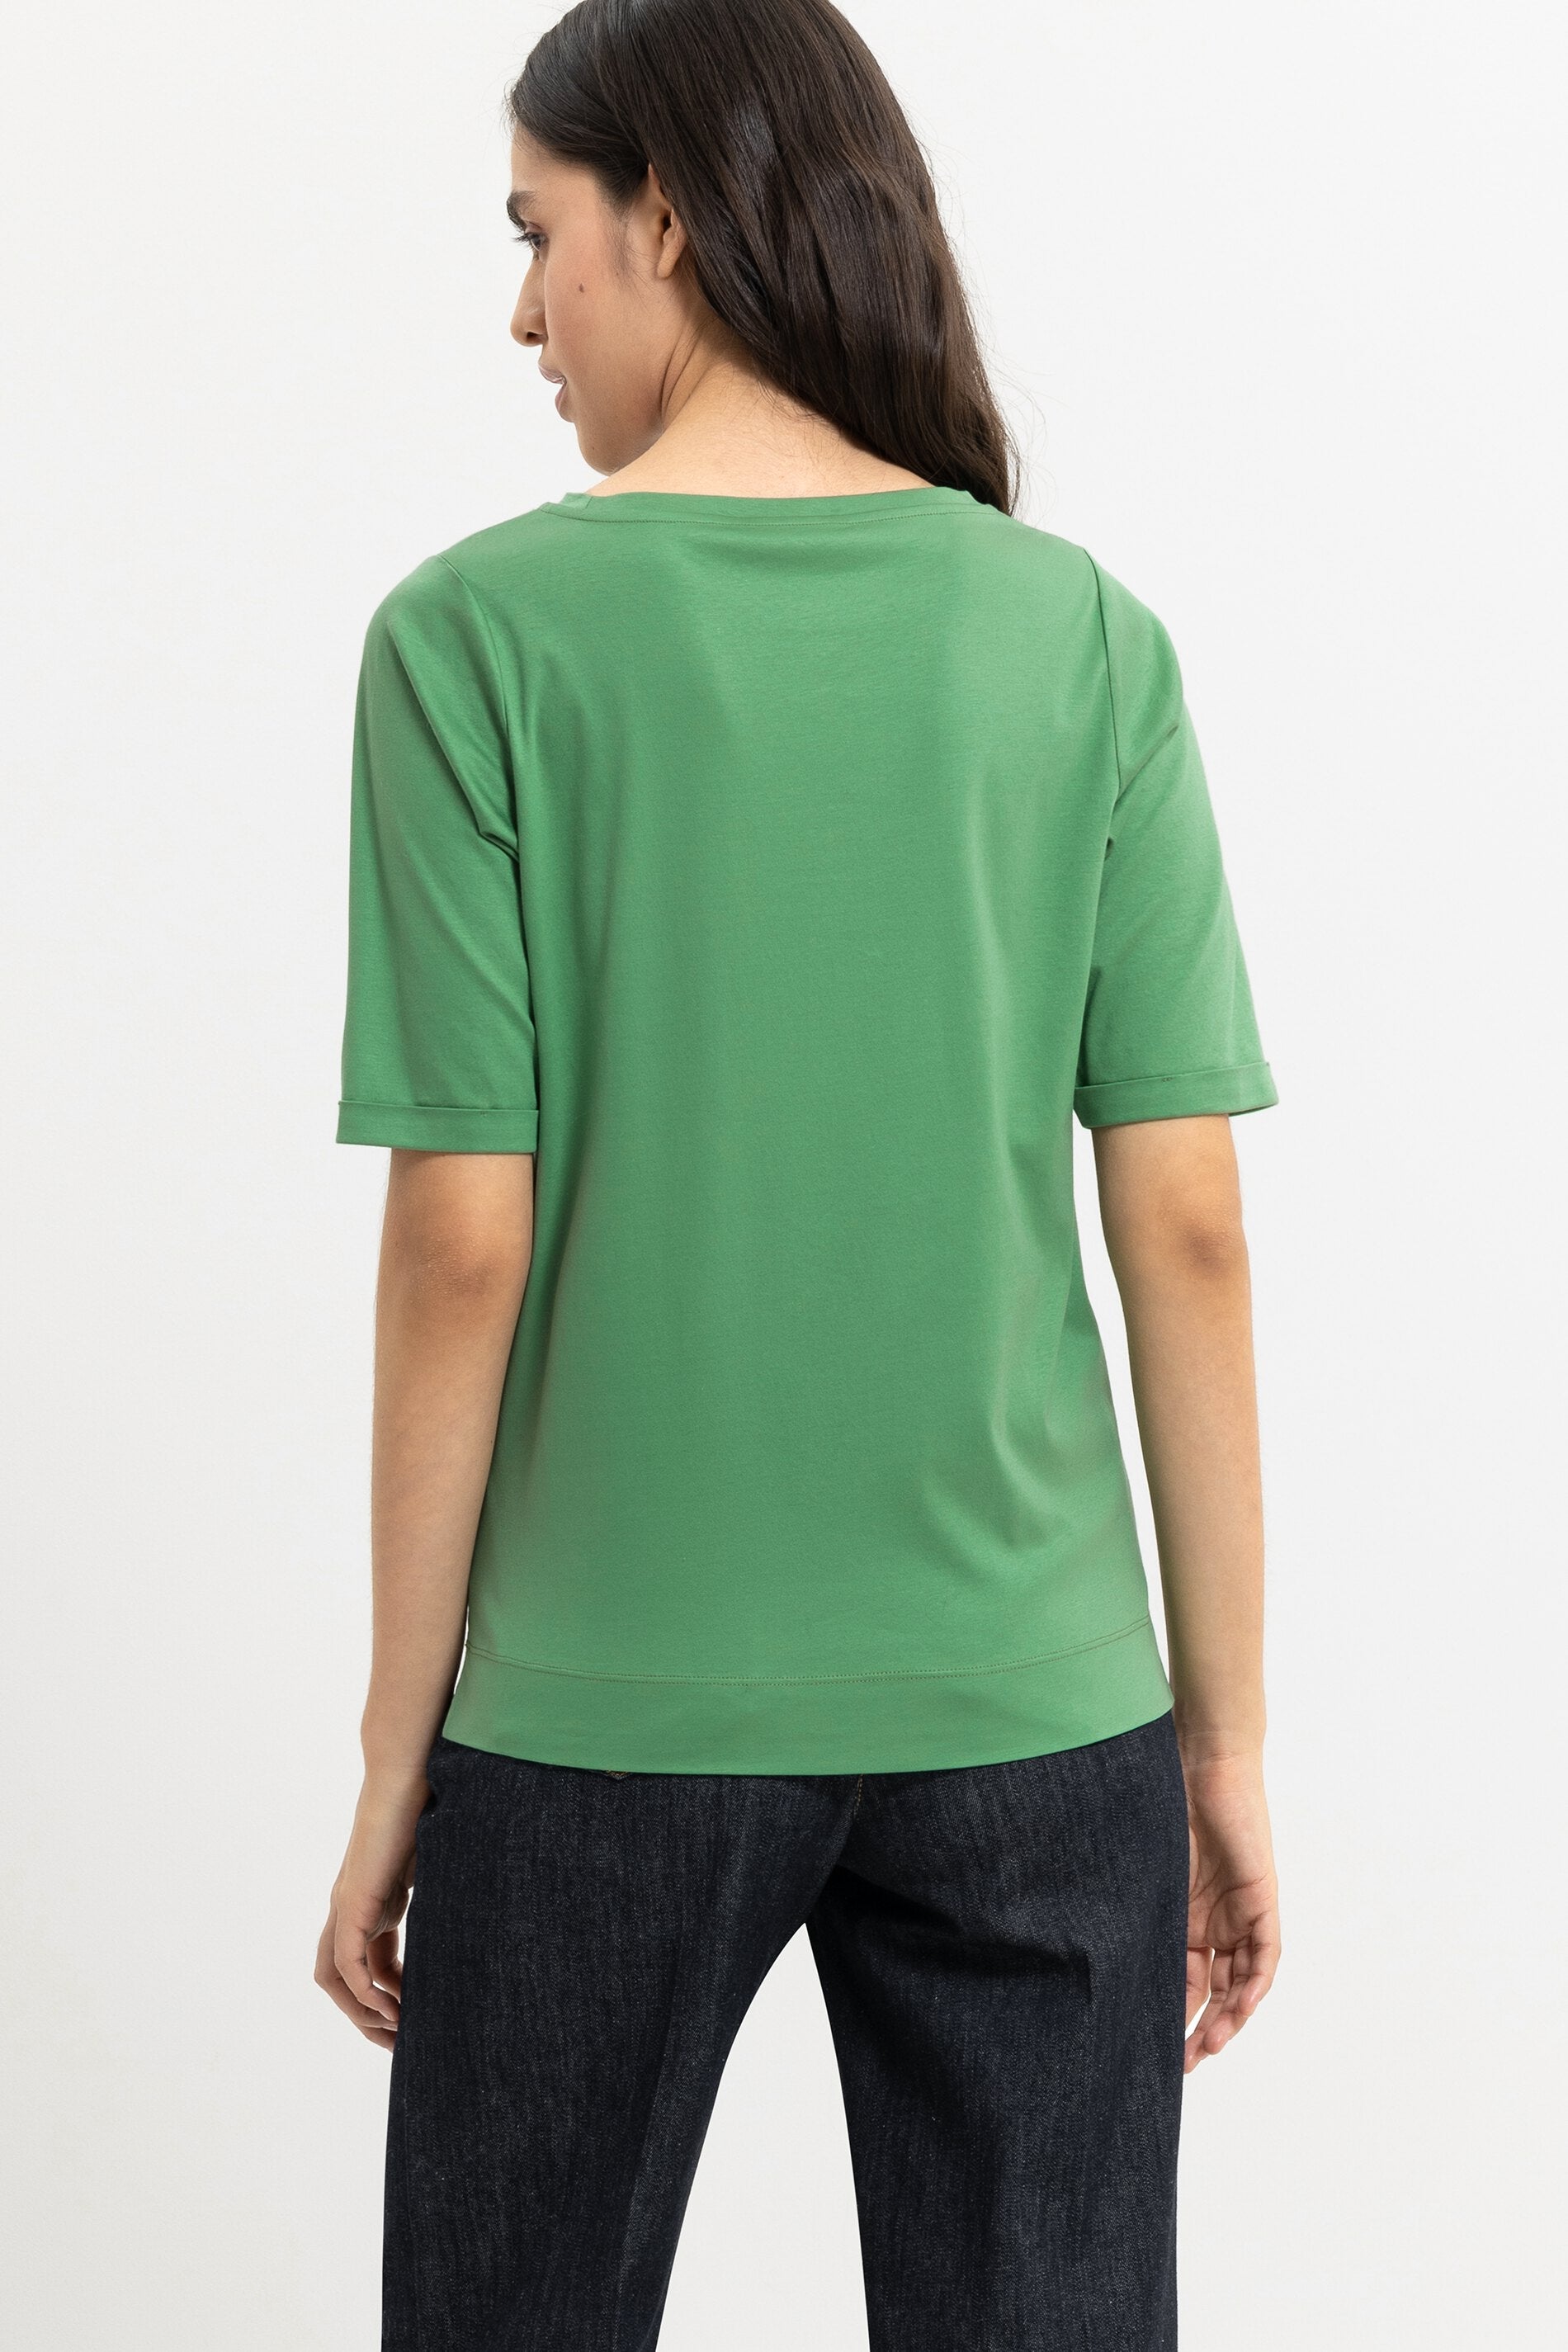 LUISA CERANO-OUTLET-SALE-Basic-Baumwoll-Shirt--by-ARCHIVIST